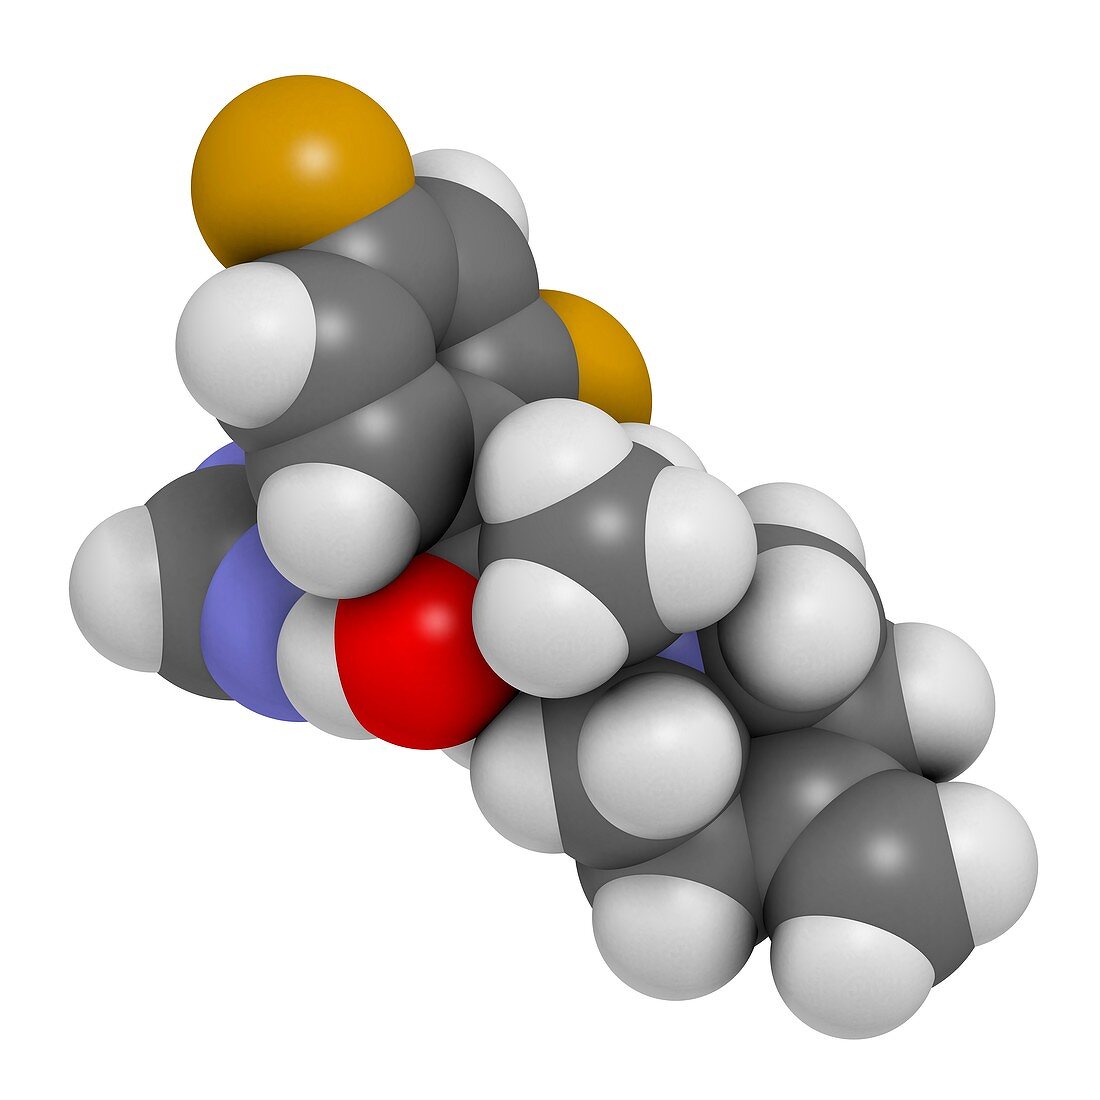 Efinaconazole antifungal drug molecule